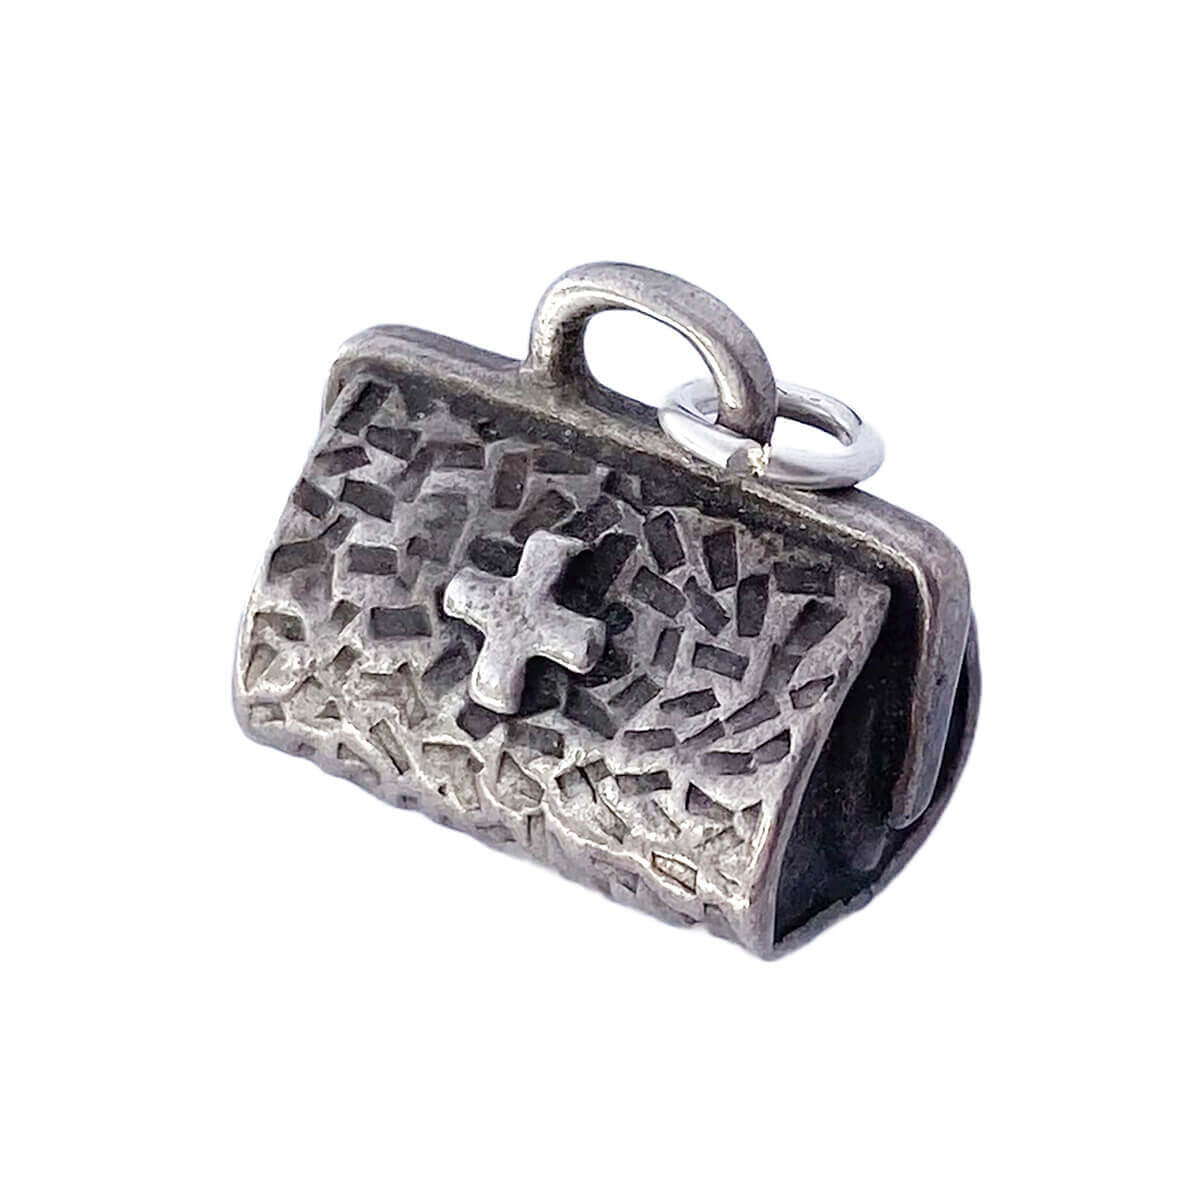 Vintage Danecraft medic’s bag charm sterling silver pendant from Charmarama